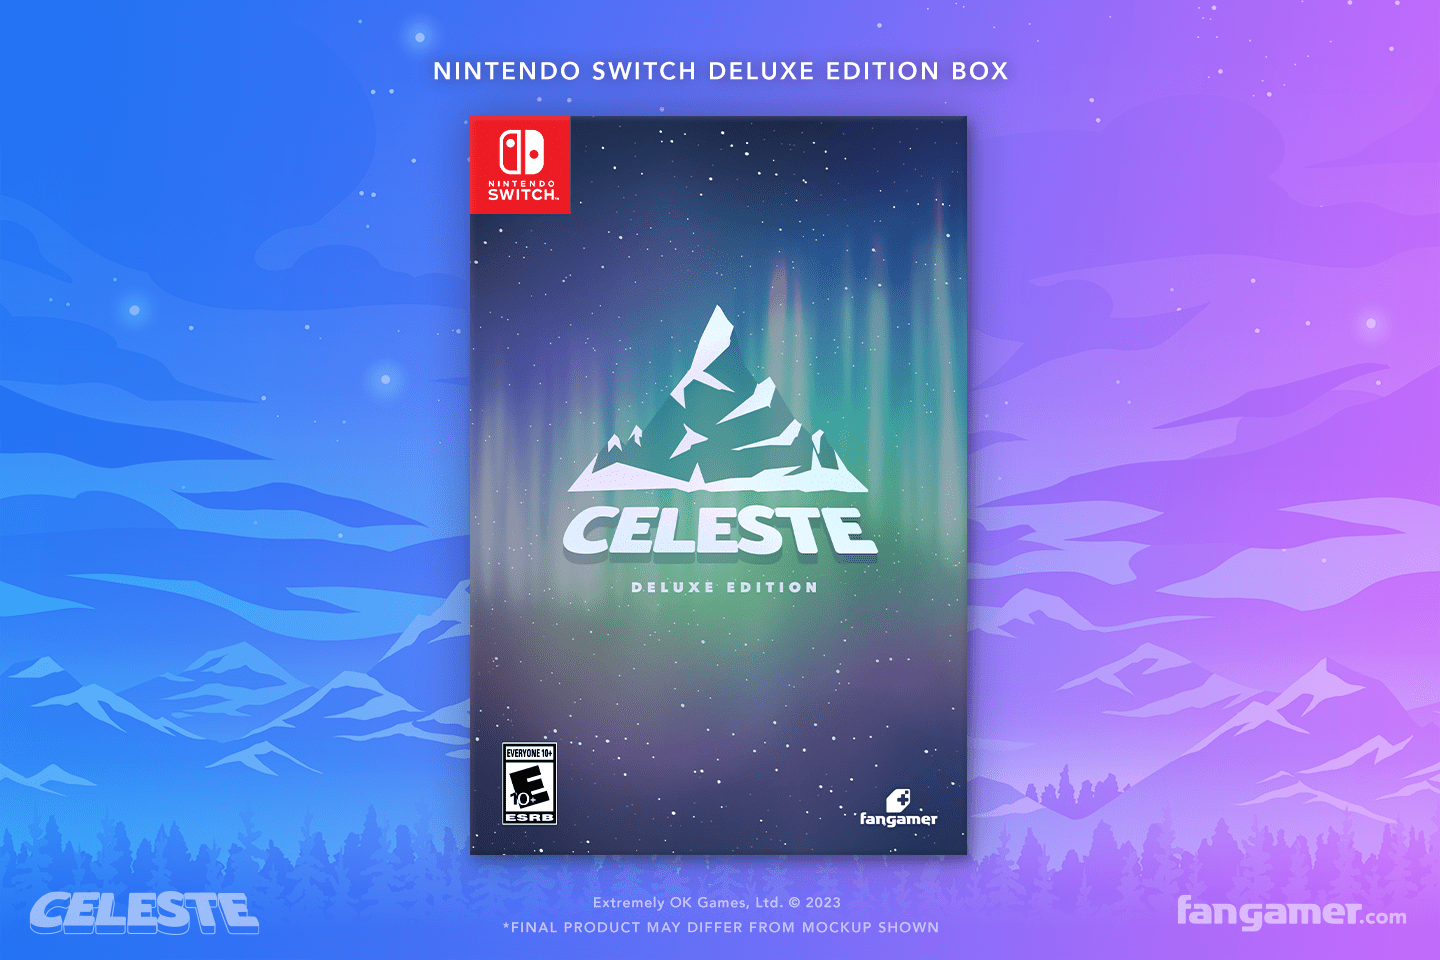 CELESTE: Game Case/Custom Cover (Nintendo Switch) - NO GAME INCLUDED